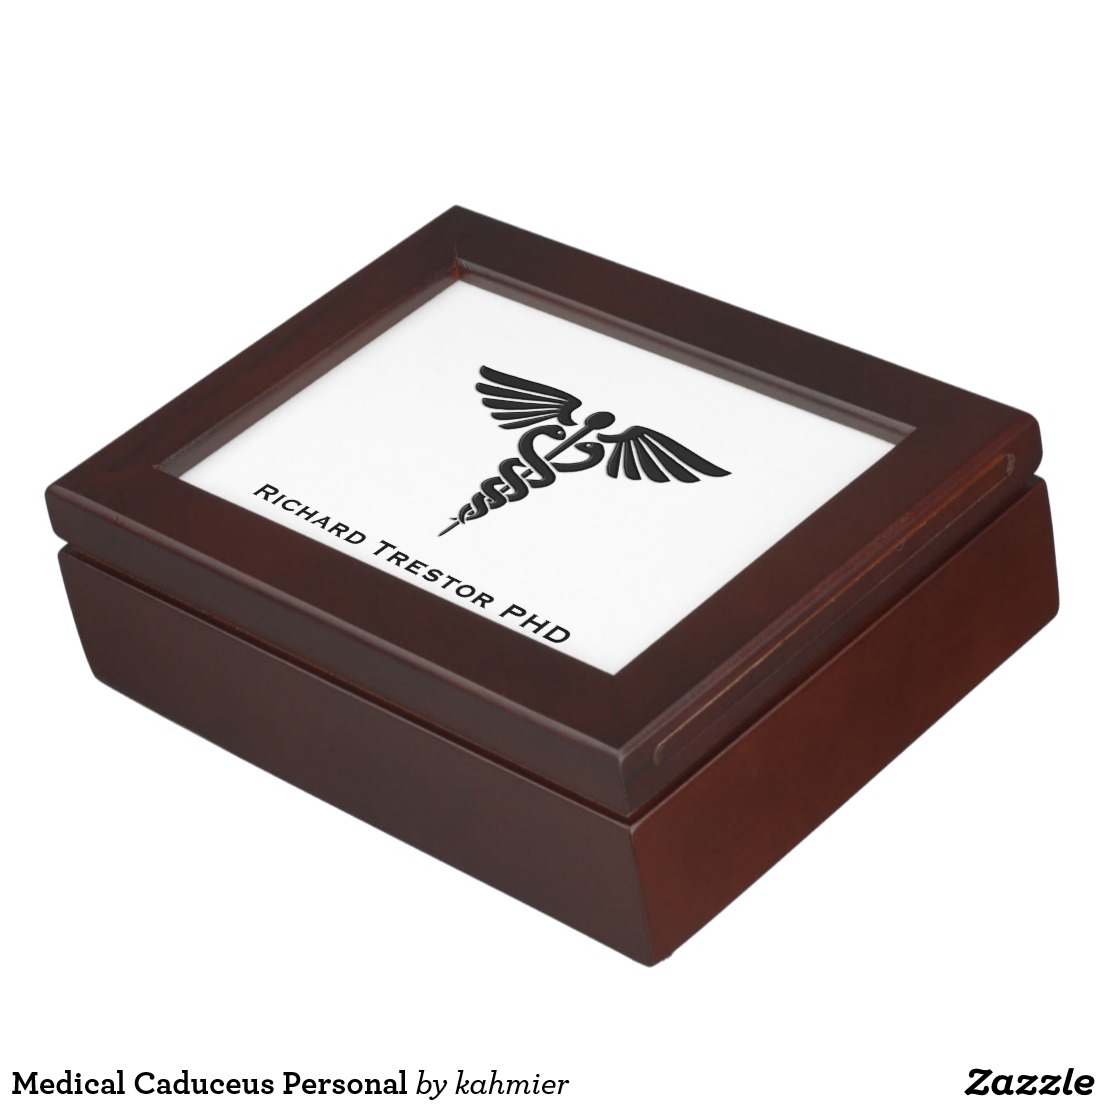 Medical Caduceus Personal Keepsake Box